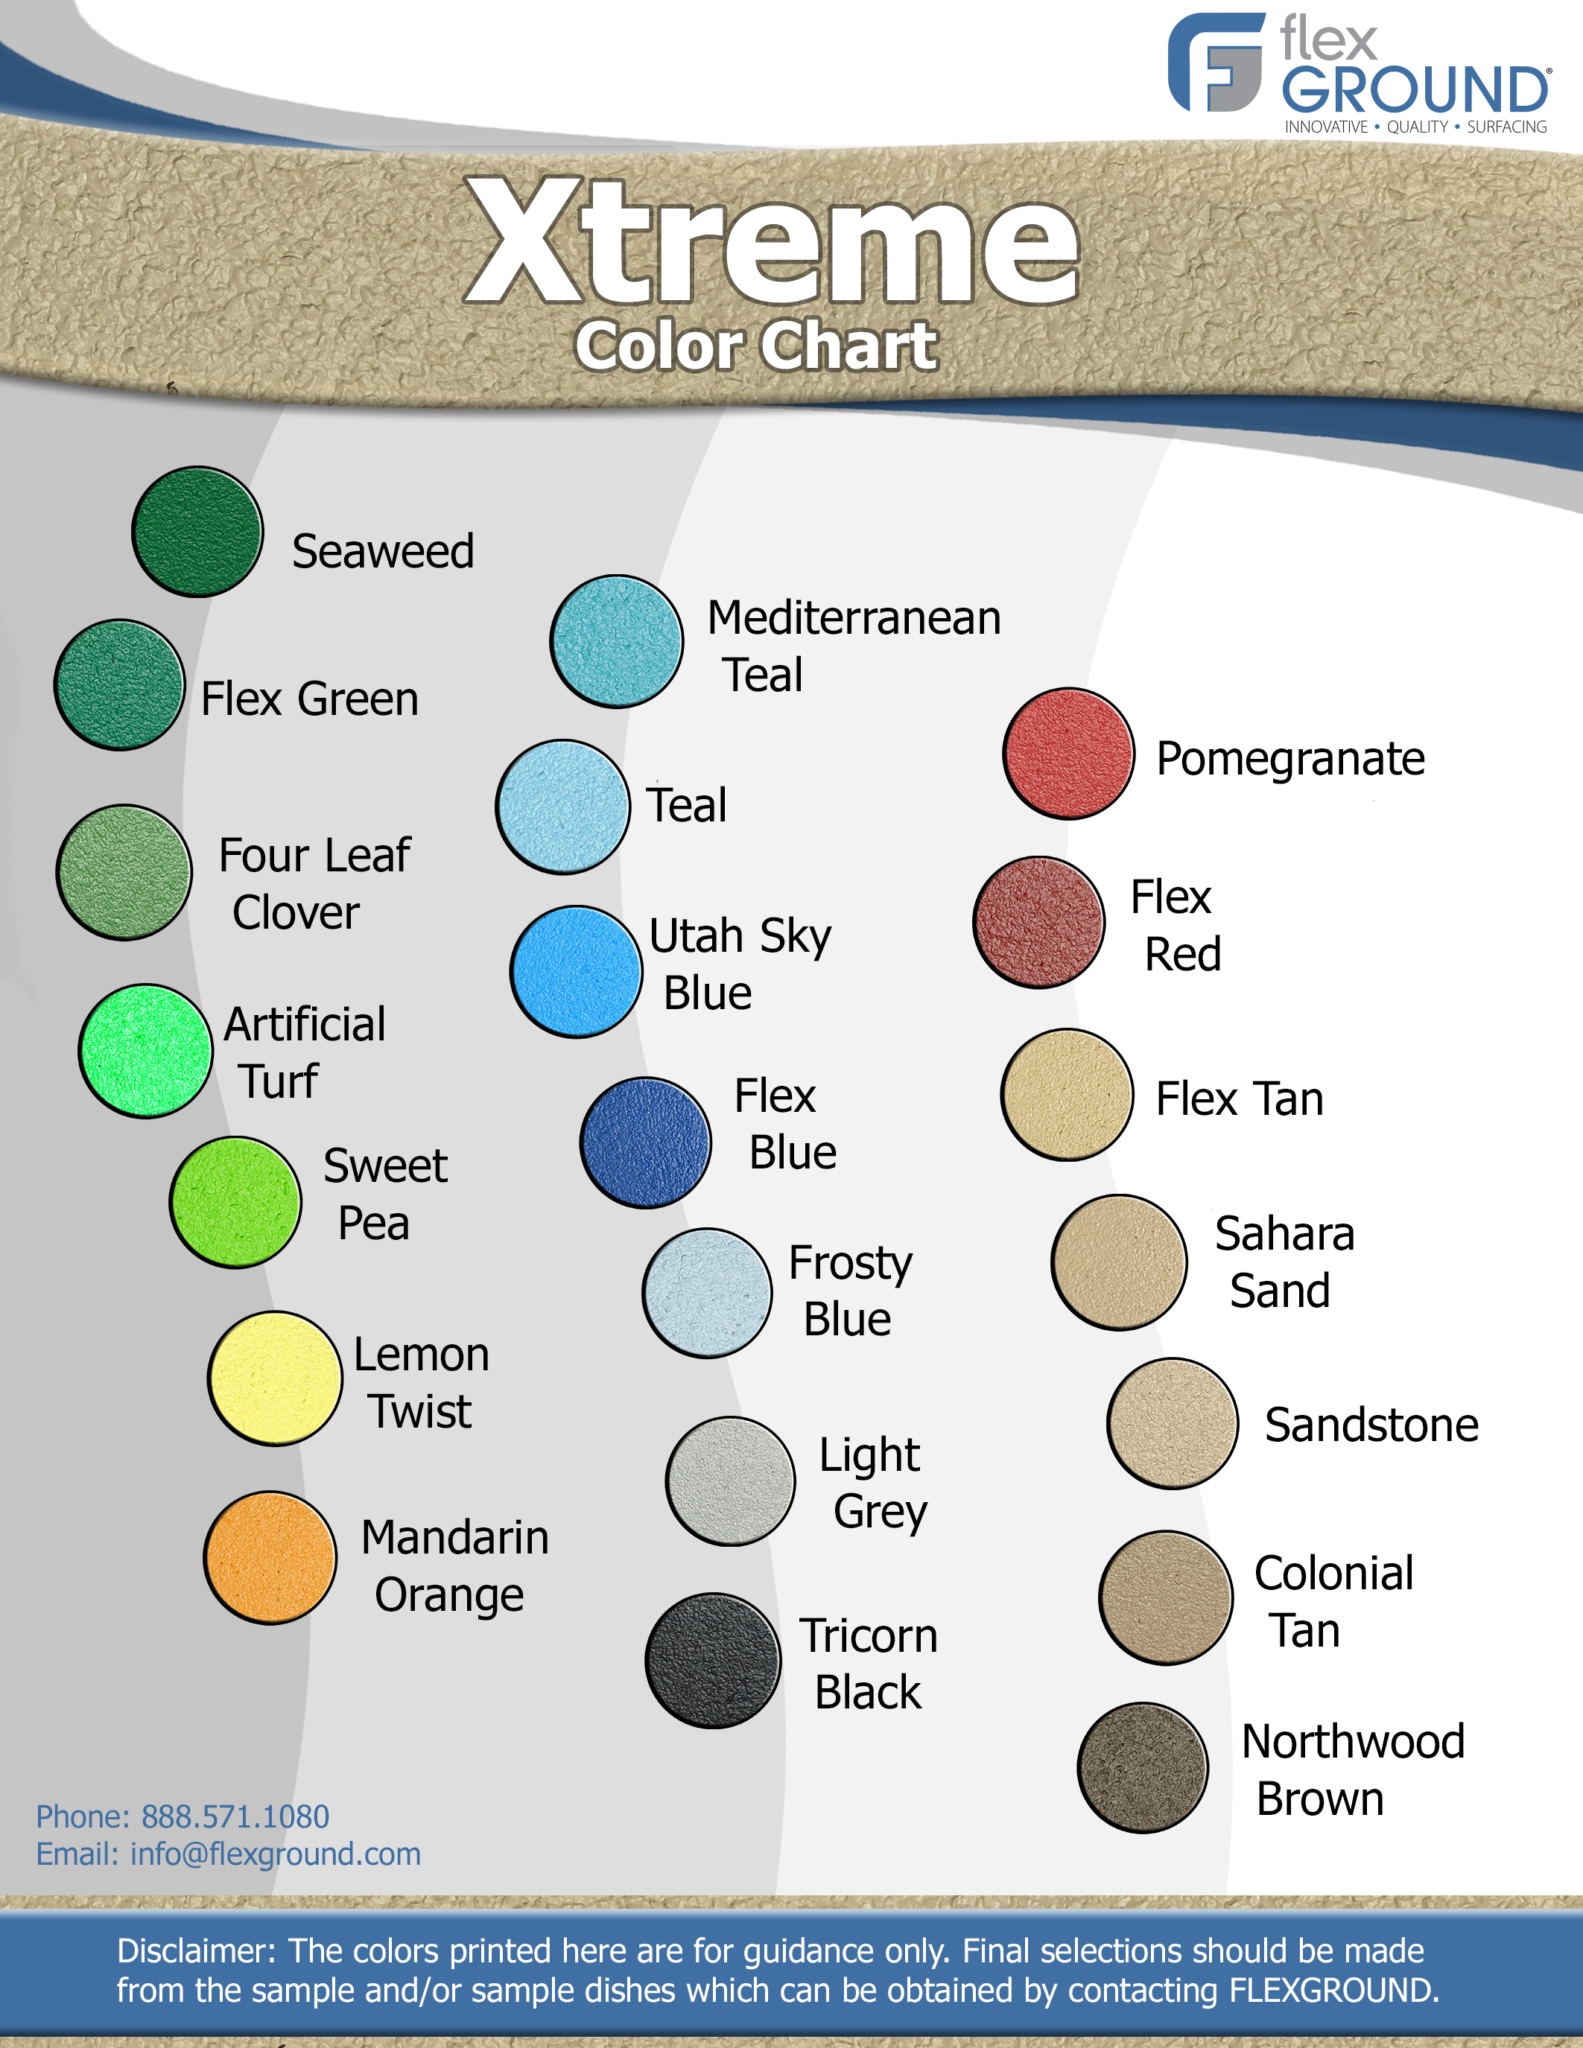 xtreme-Color-Chart-1583x2048